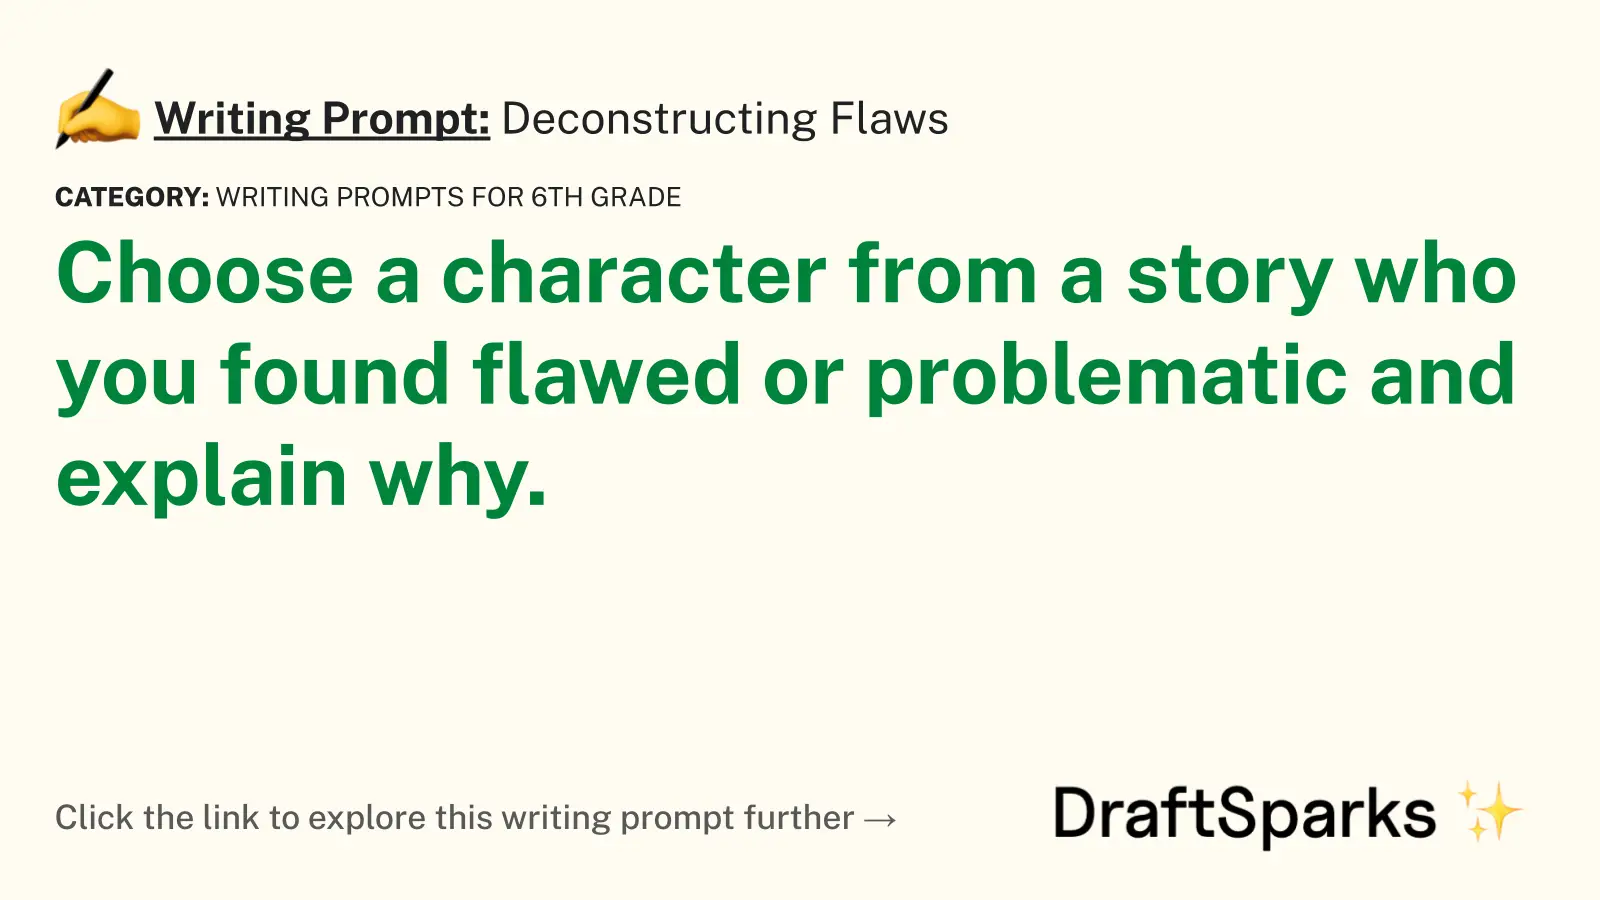 Deconstructing Flaws